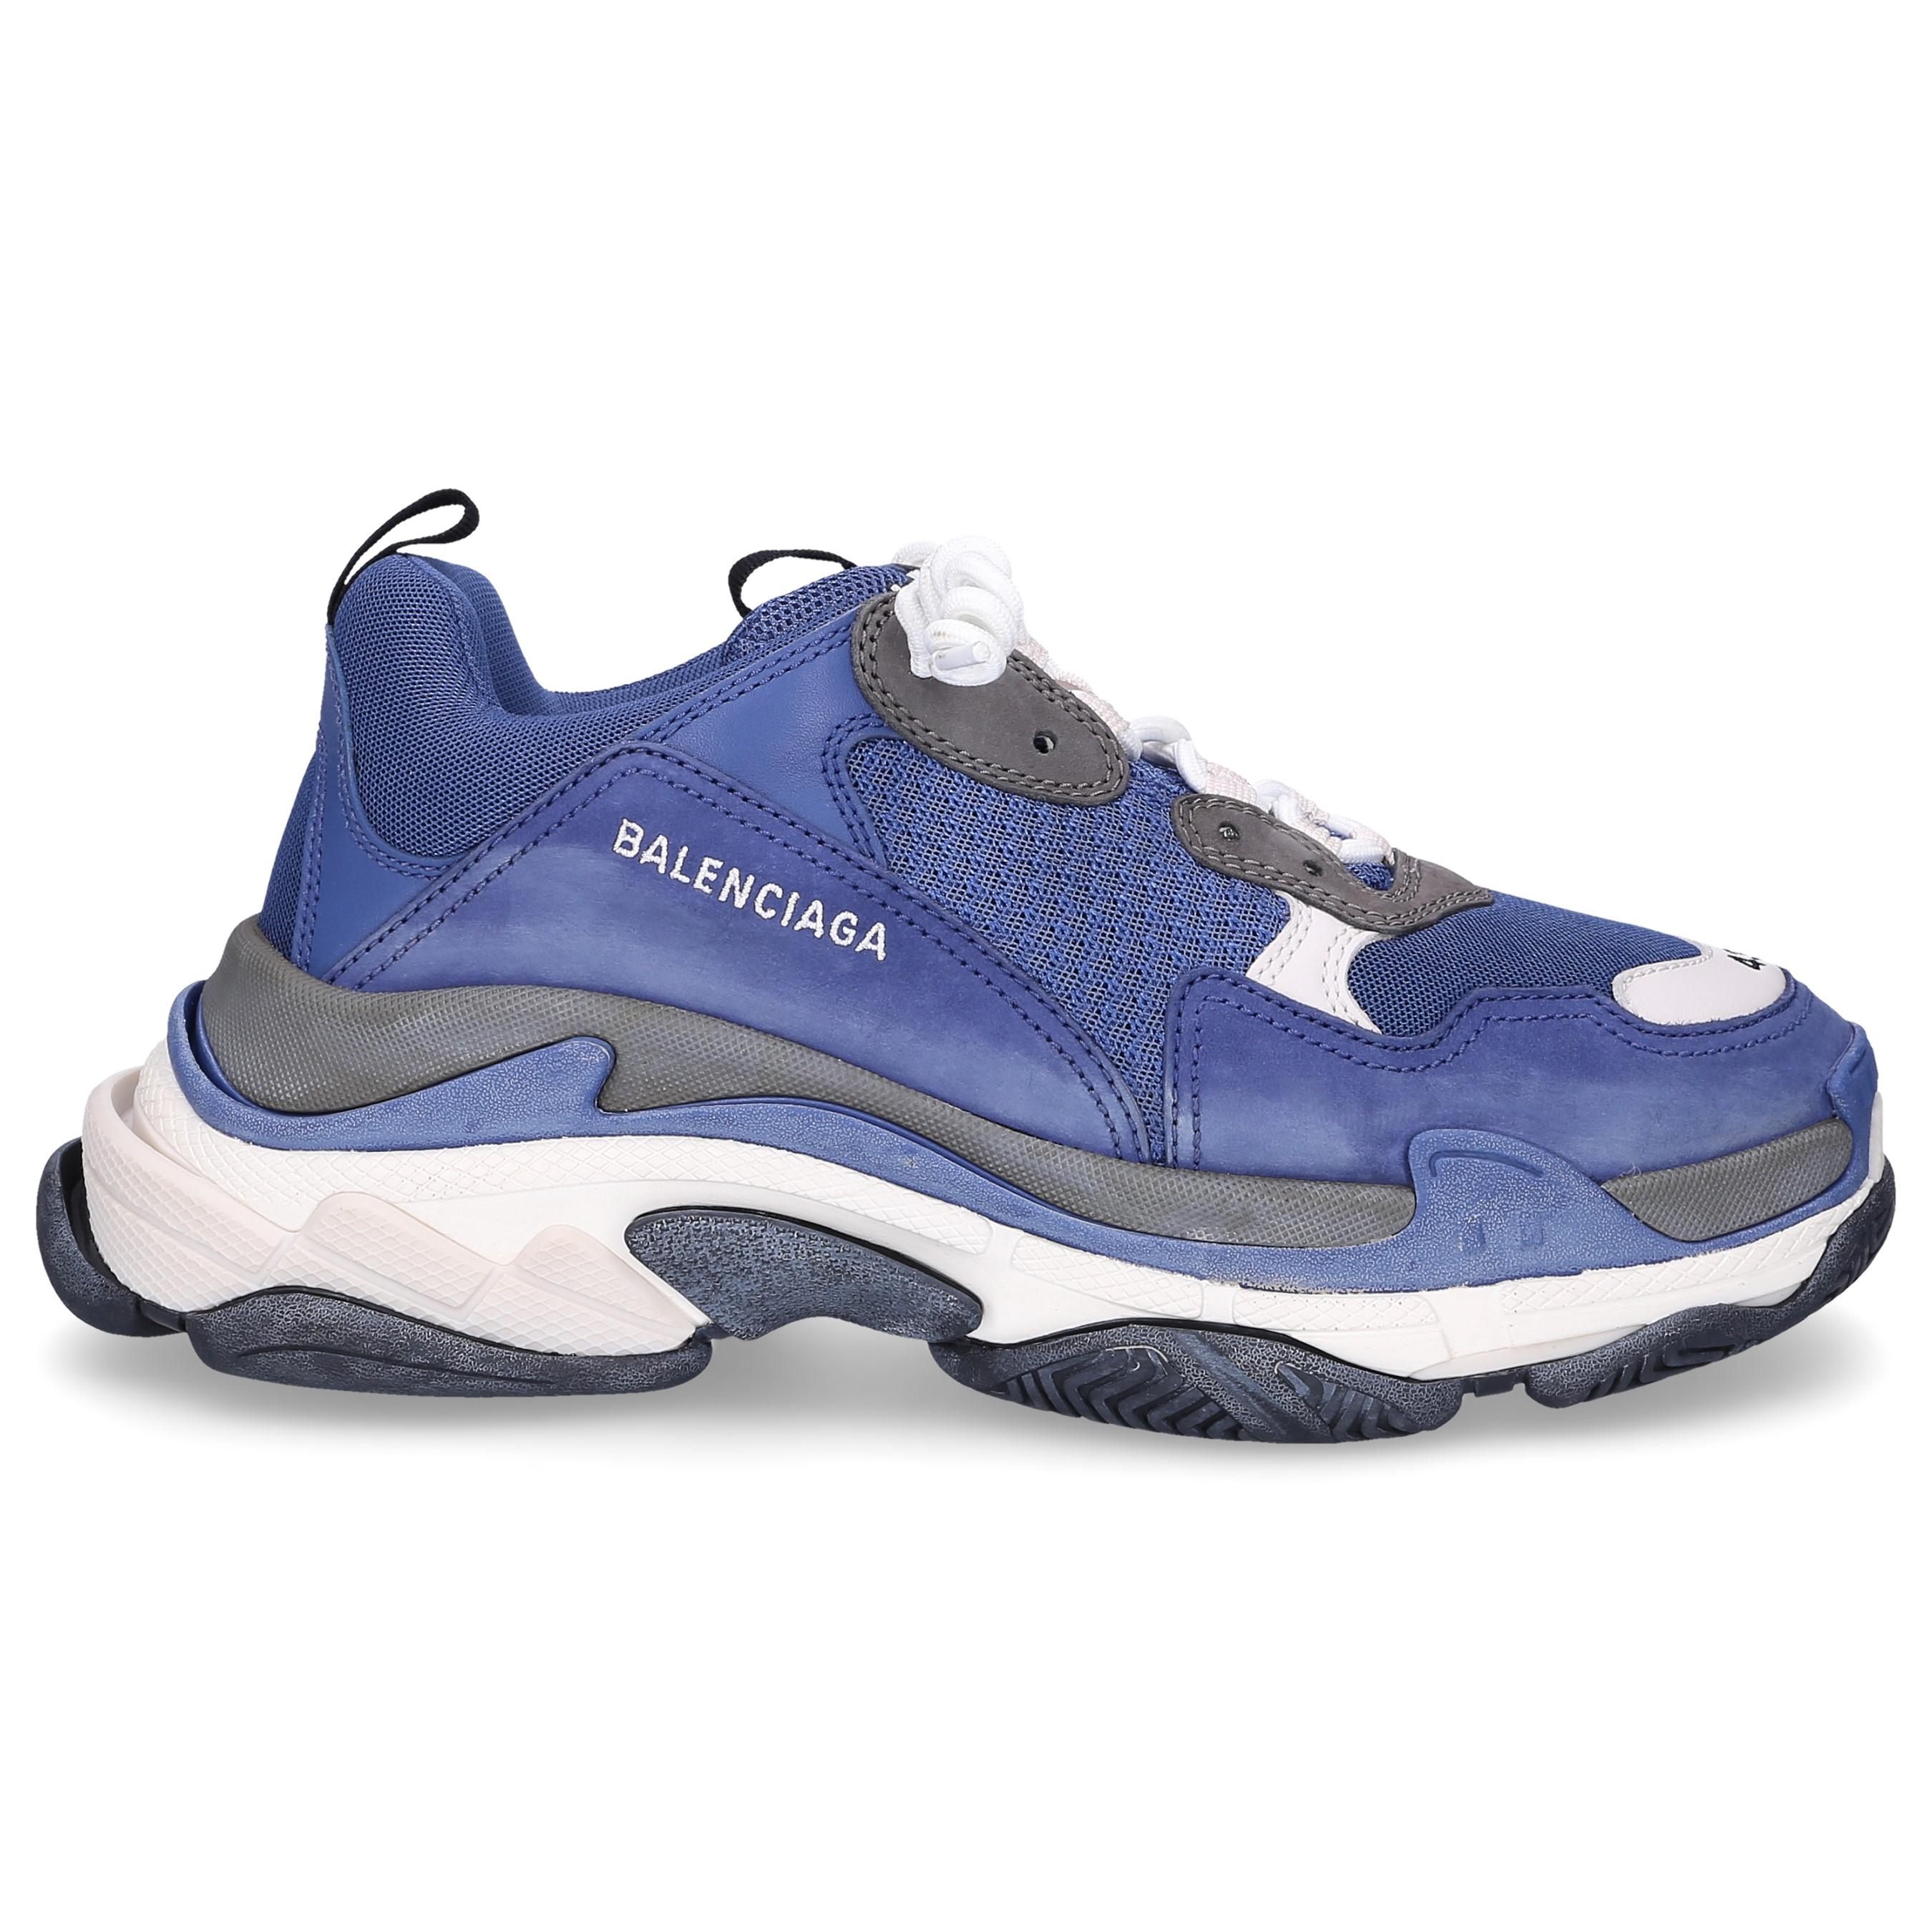 Balenciaga Suede Flat Shoes Blue Triple S for Men - Save ...